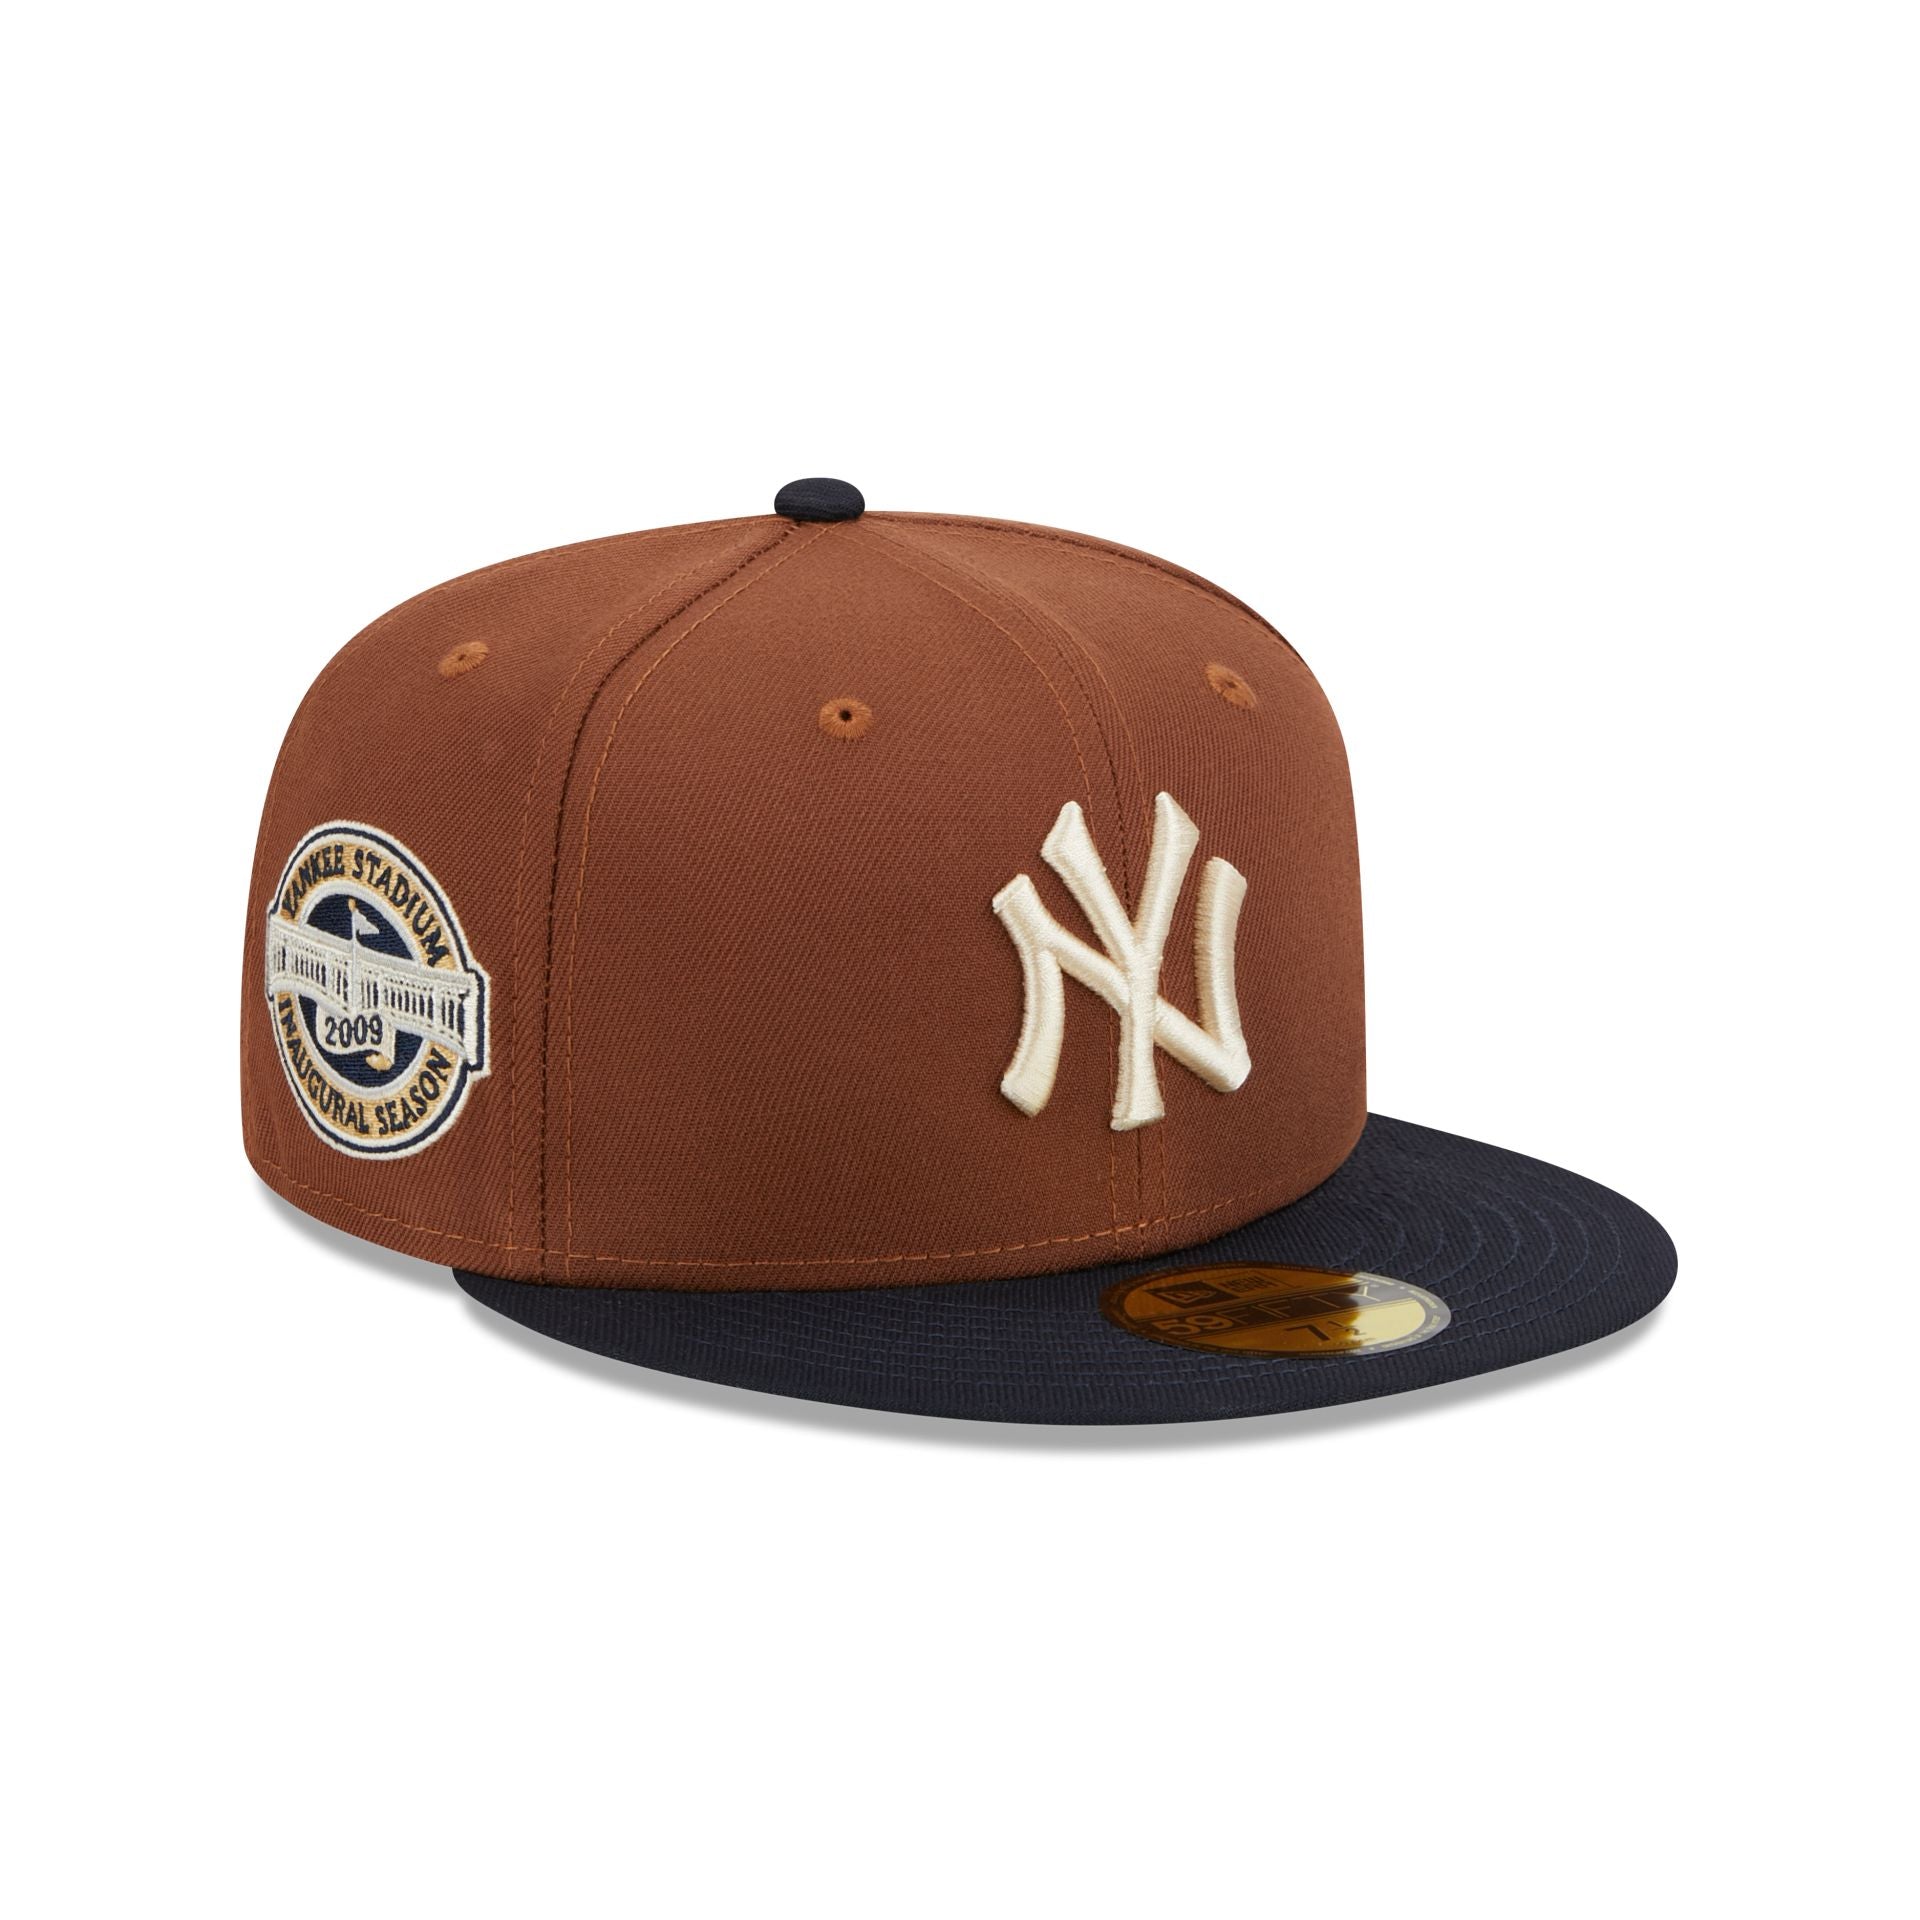 New York Era Caps & New Hats Yankees Cap –